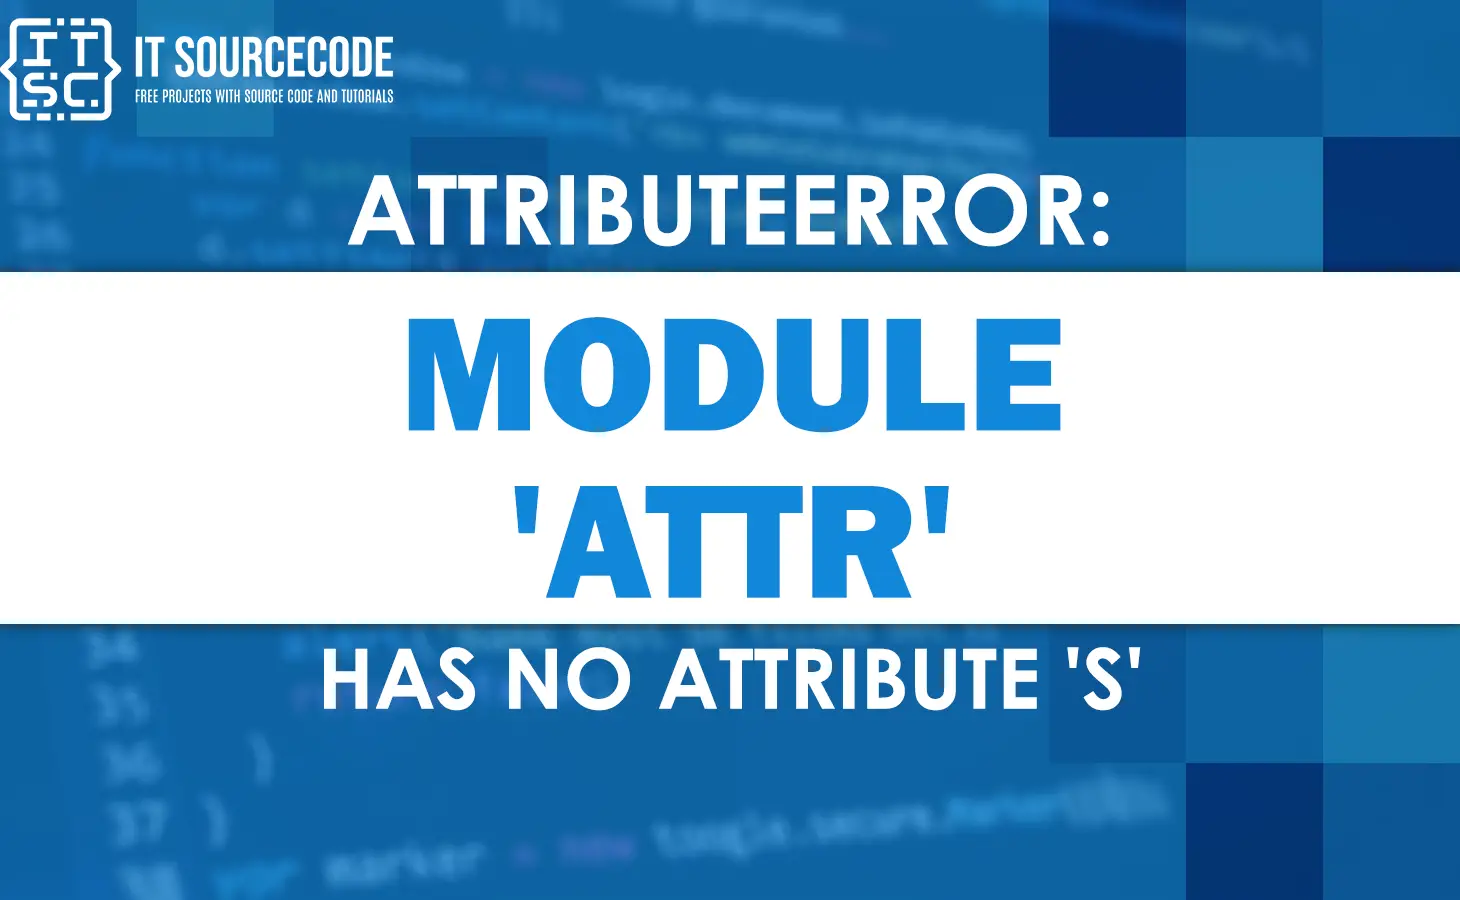 Attributeerror: module 'attr' has no attribute 's' [SOLVED]